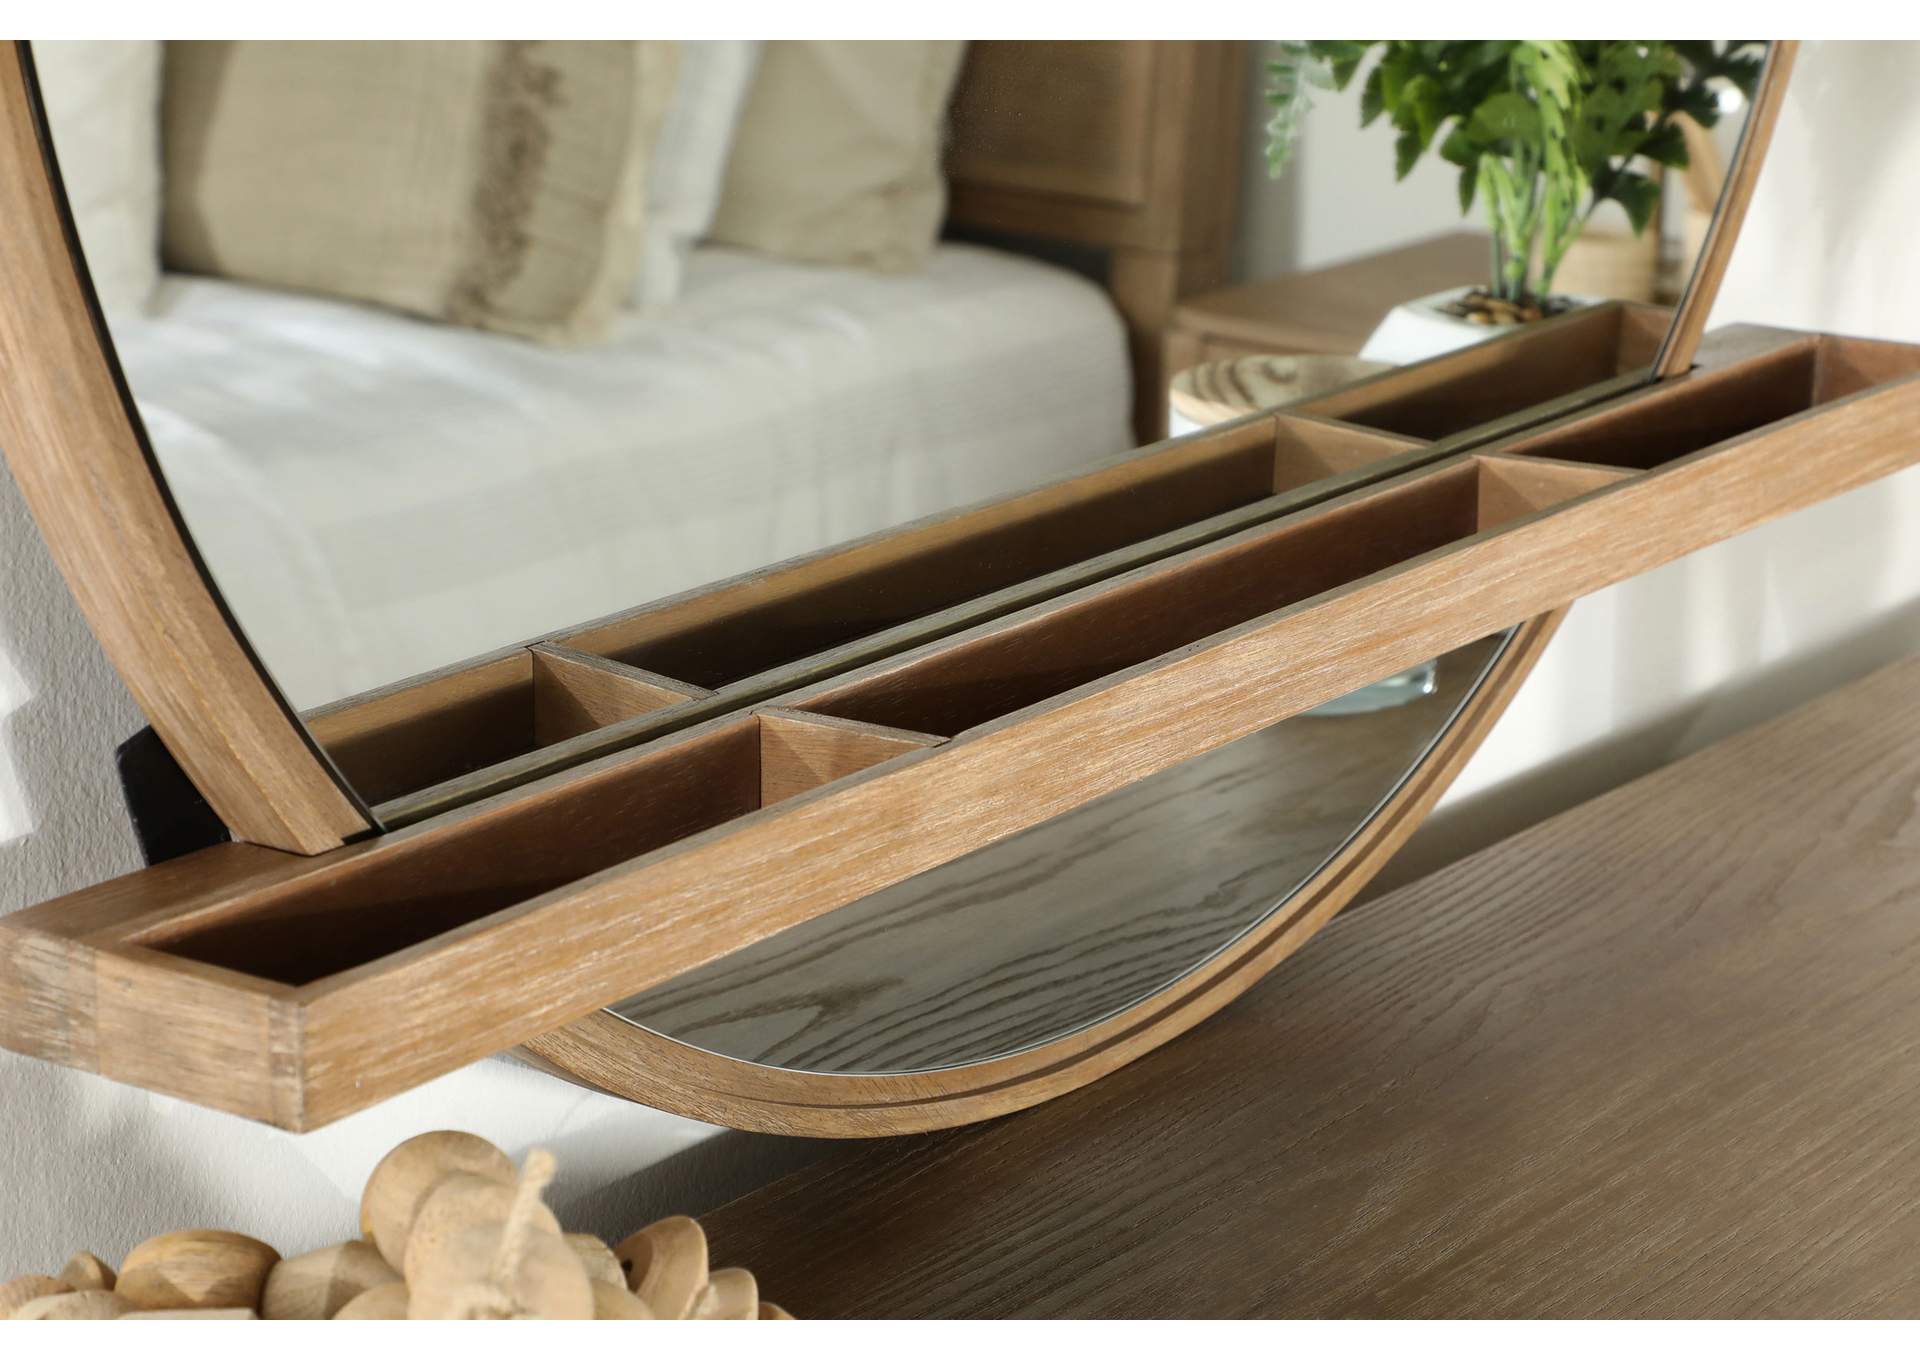 Arini 5-piece Upholstered Eastern King Bedroom Set Sand Wash,Coaster Furniture